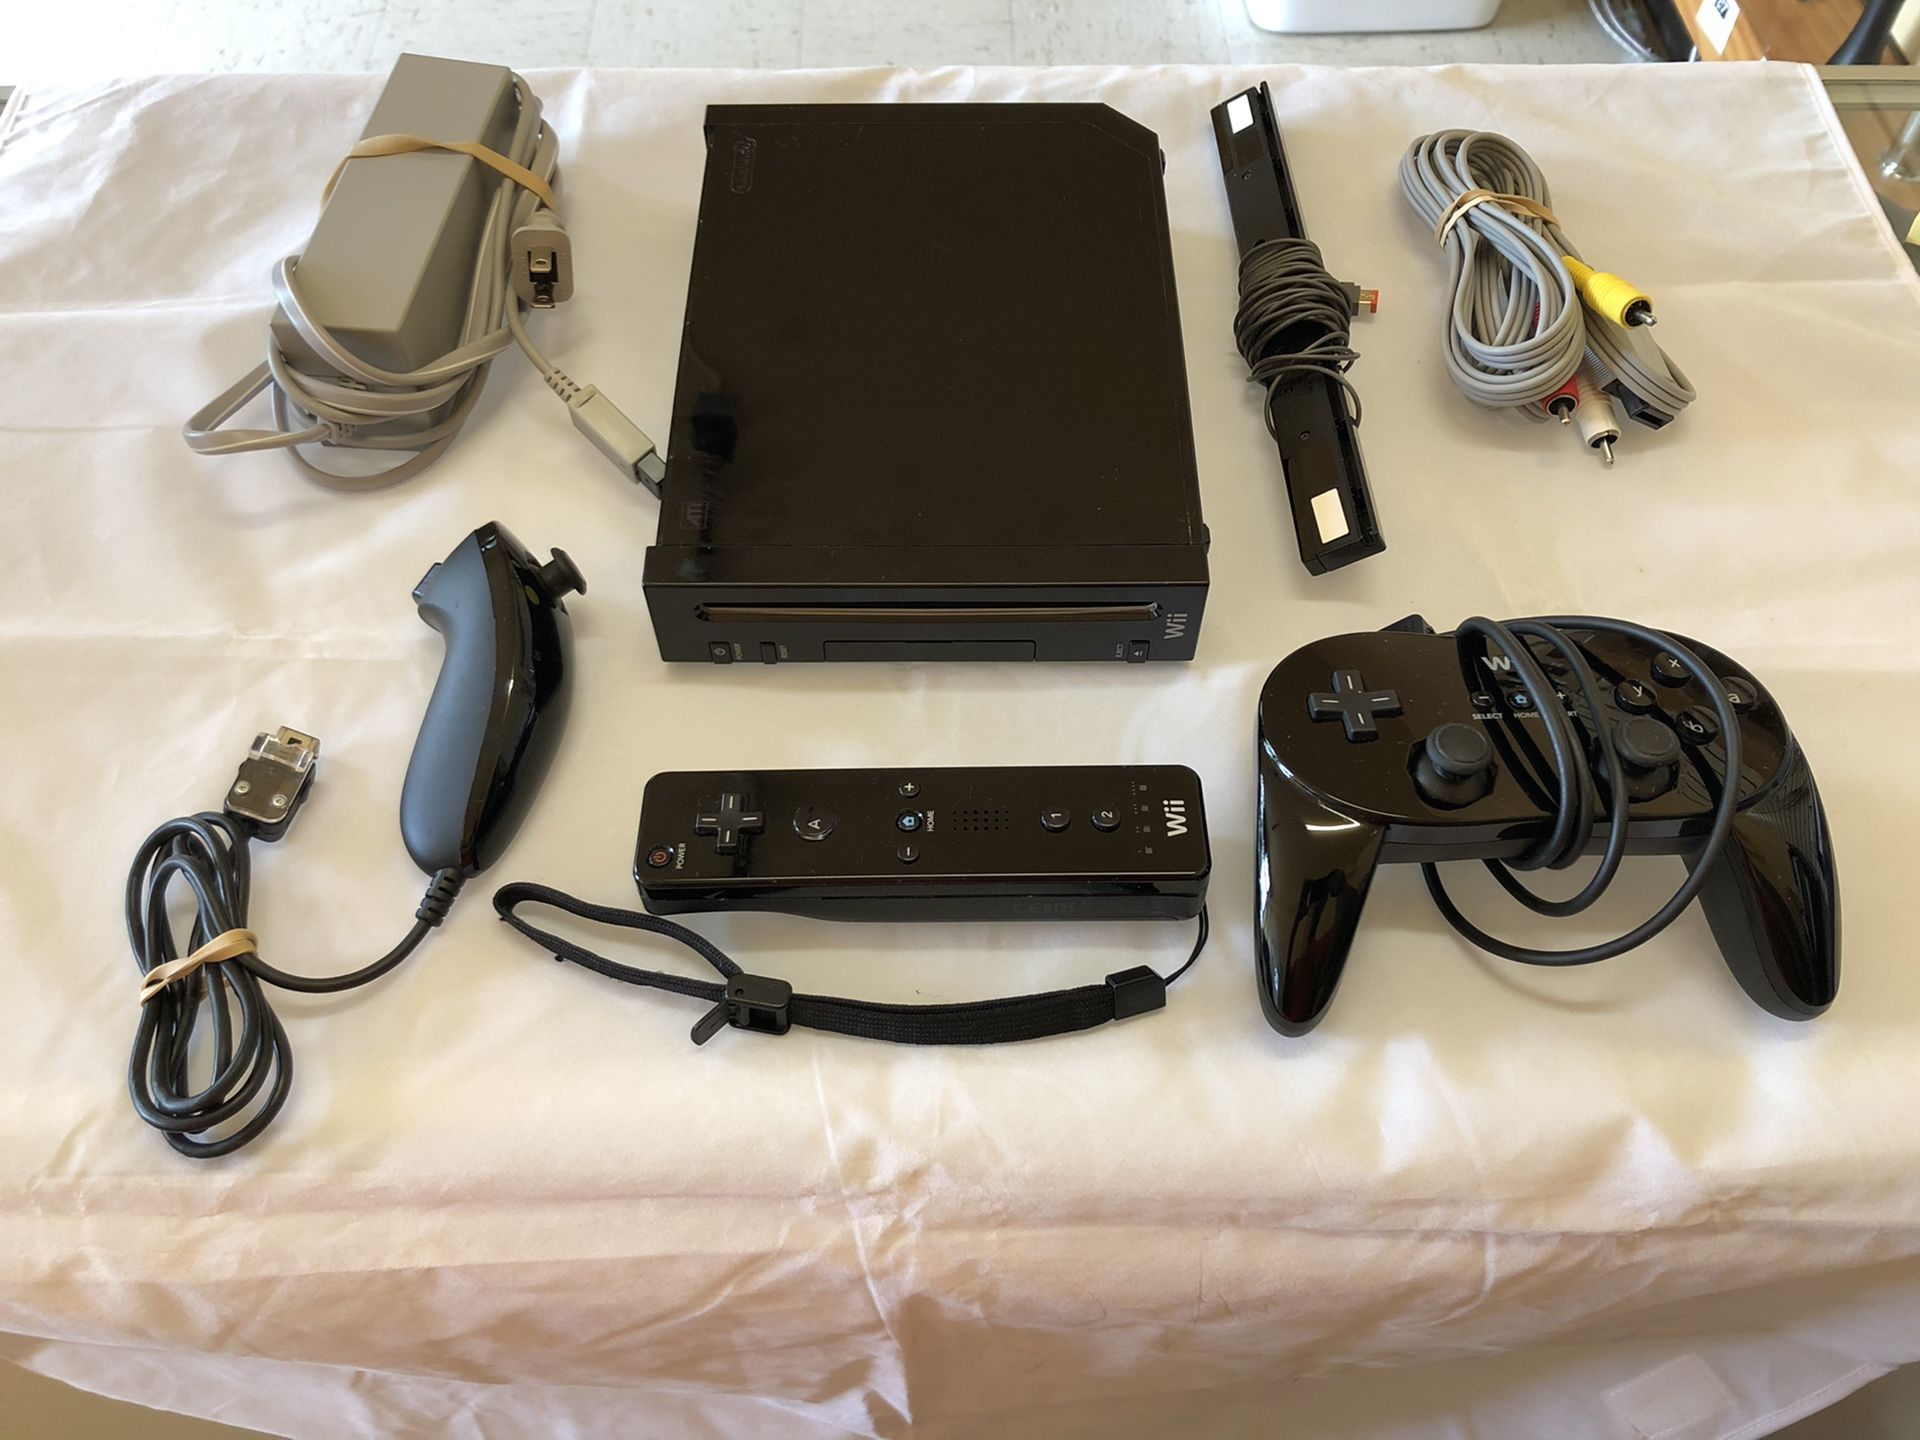 Black Wii Set (N64 & SNES games installed) - PRICE FIRM